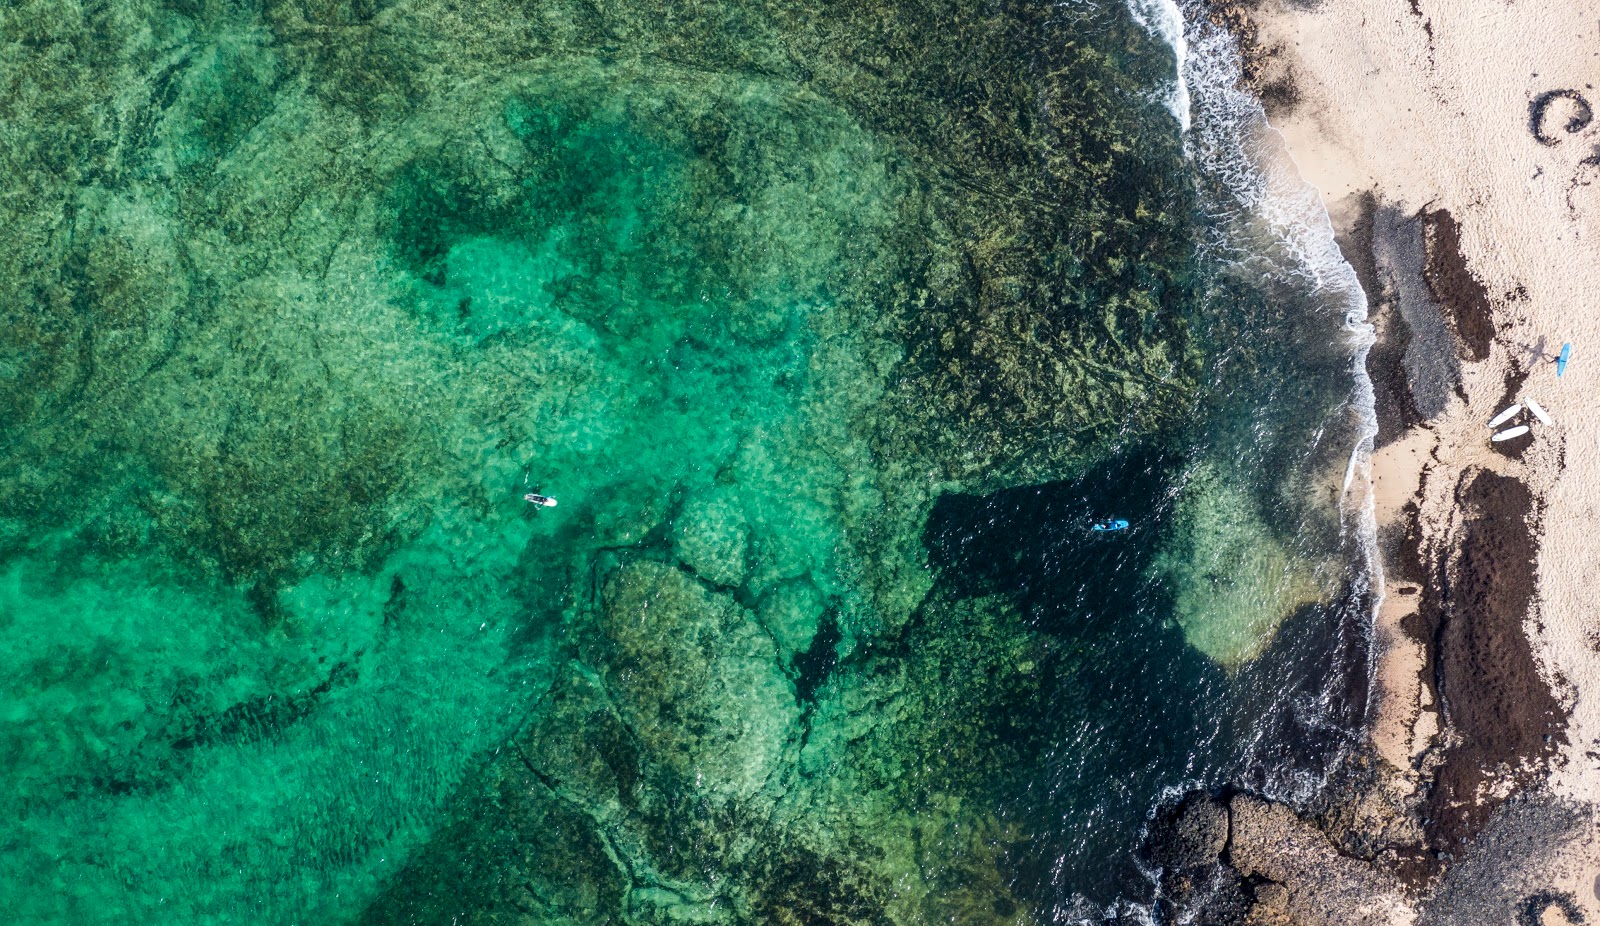 Foto di Playa El Charcon con una superficie del acqua verde chiaro